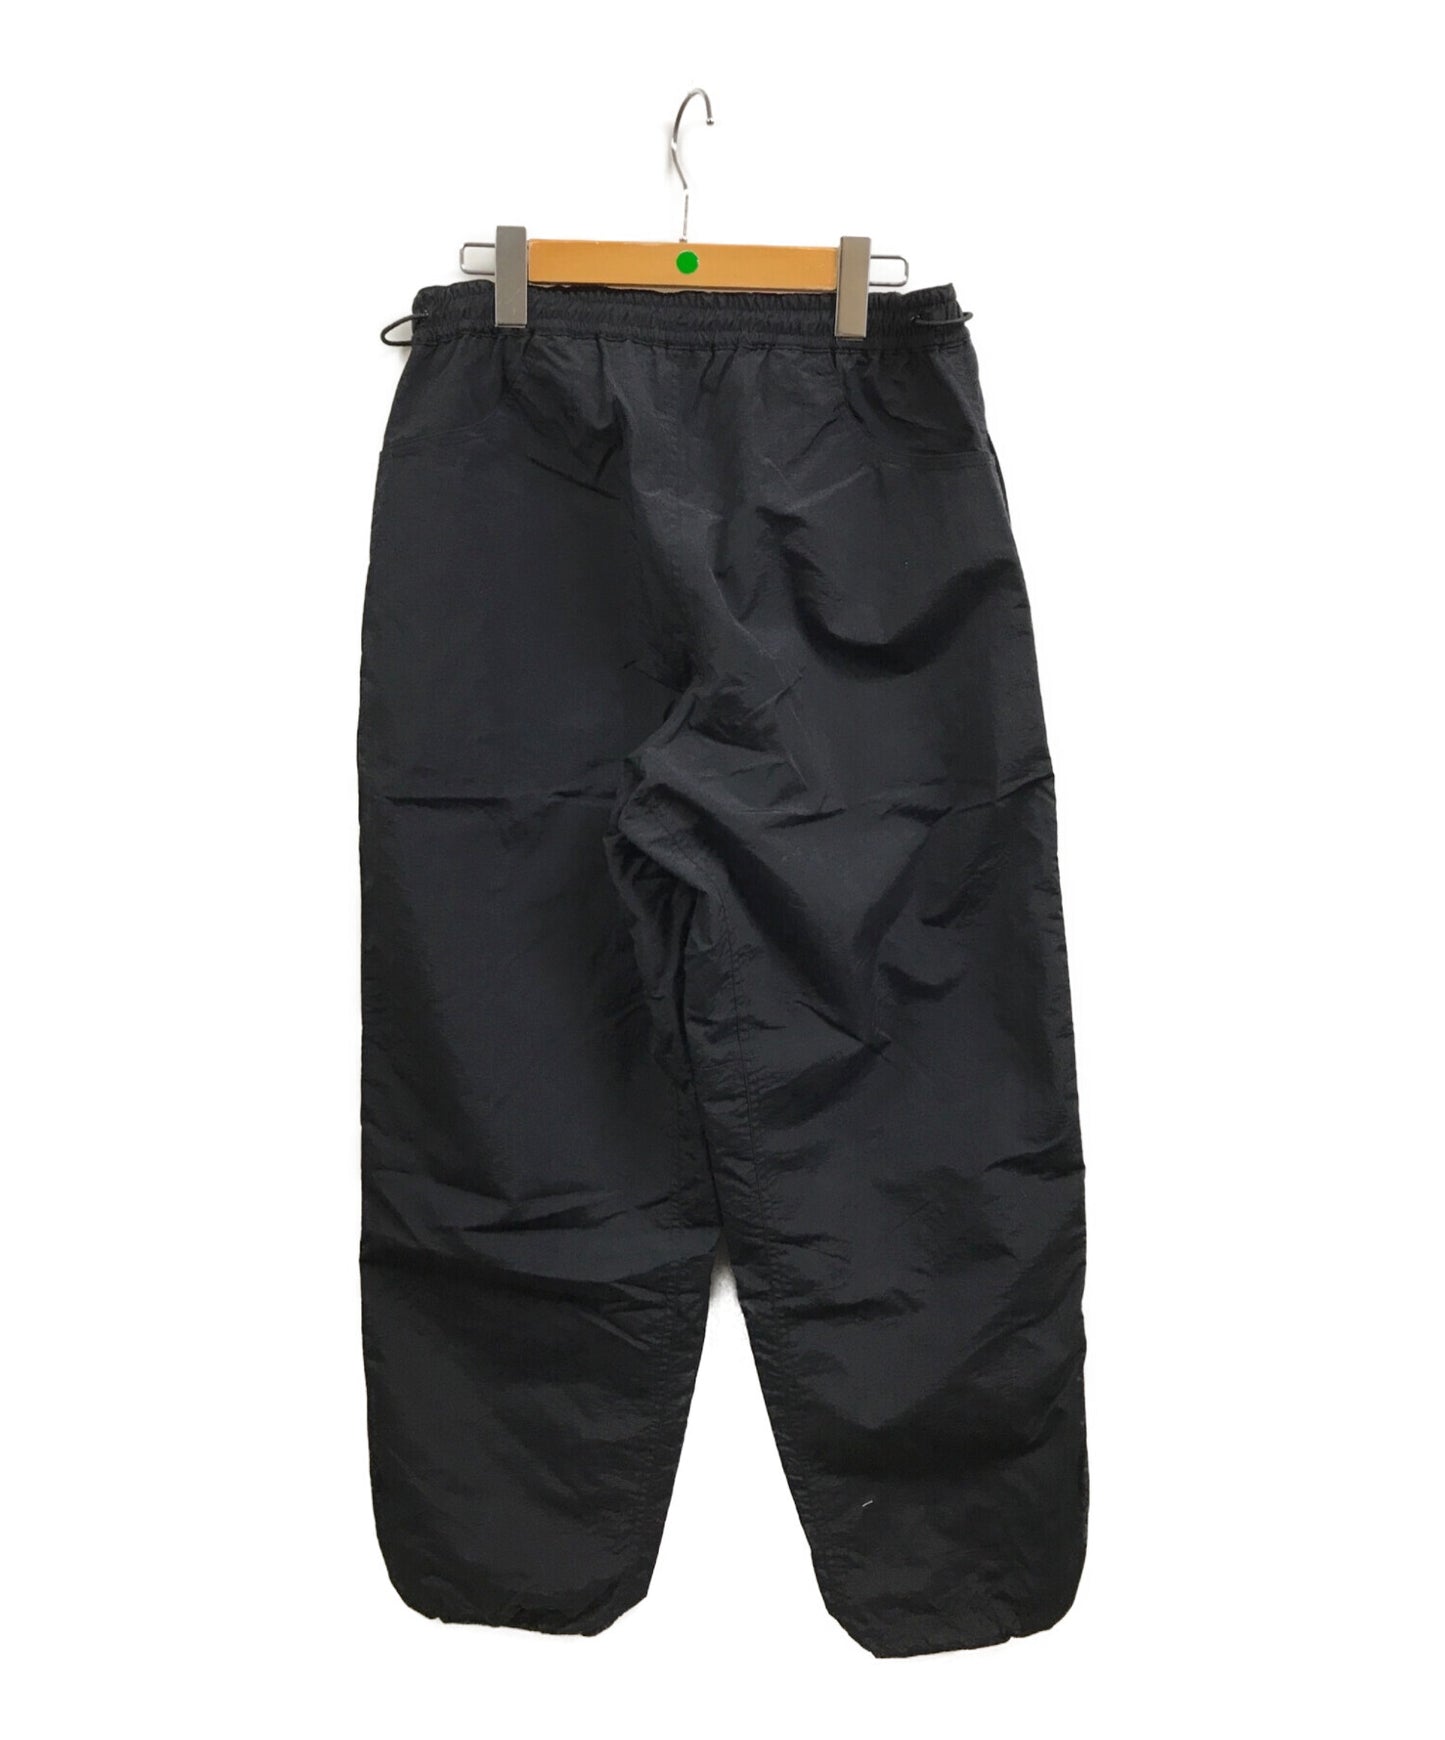 [Pre-owned] NEIGHBORHOOD MAUKA / N-PT Nylon pants 212TSN-PTM01